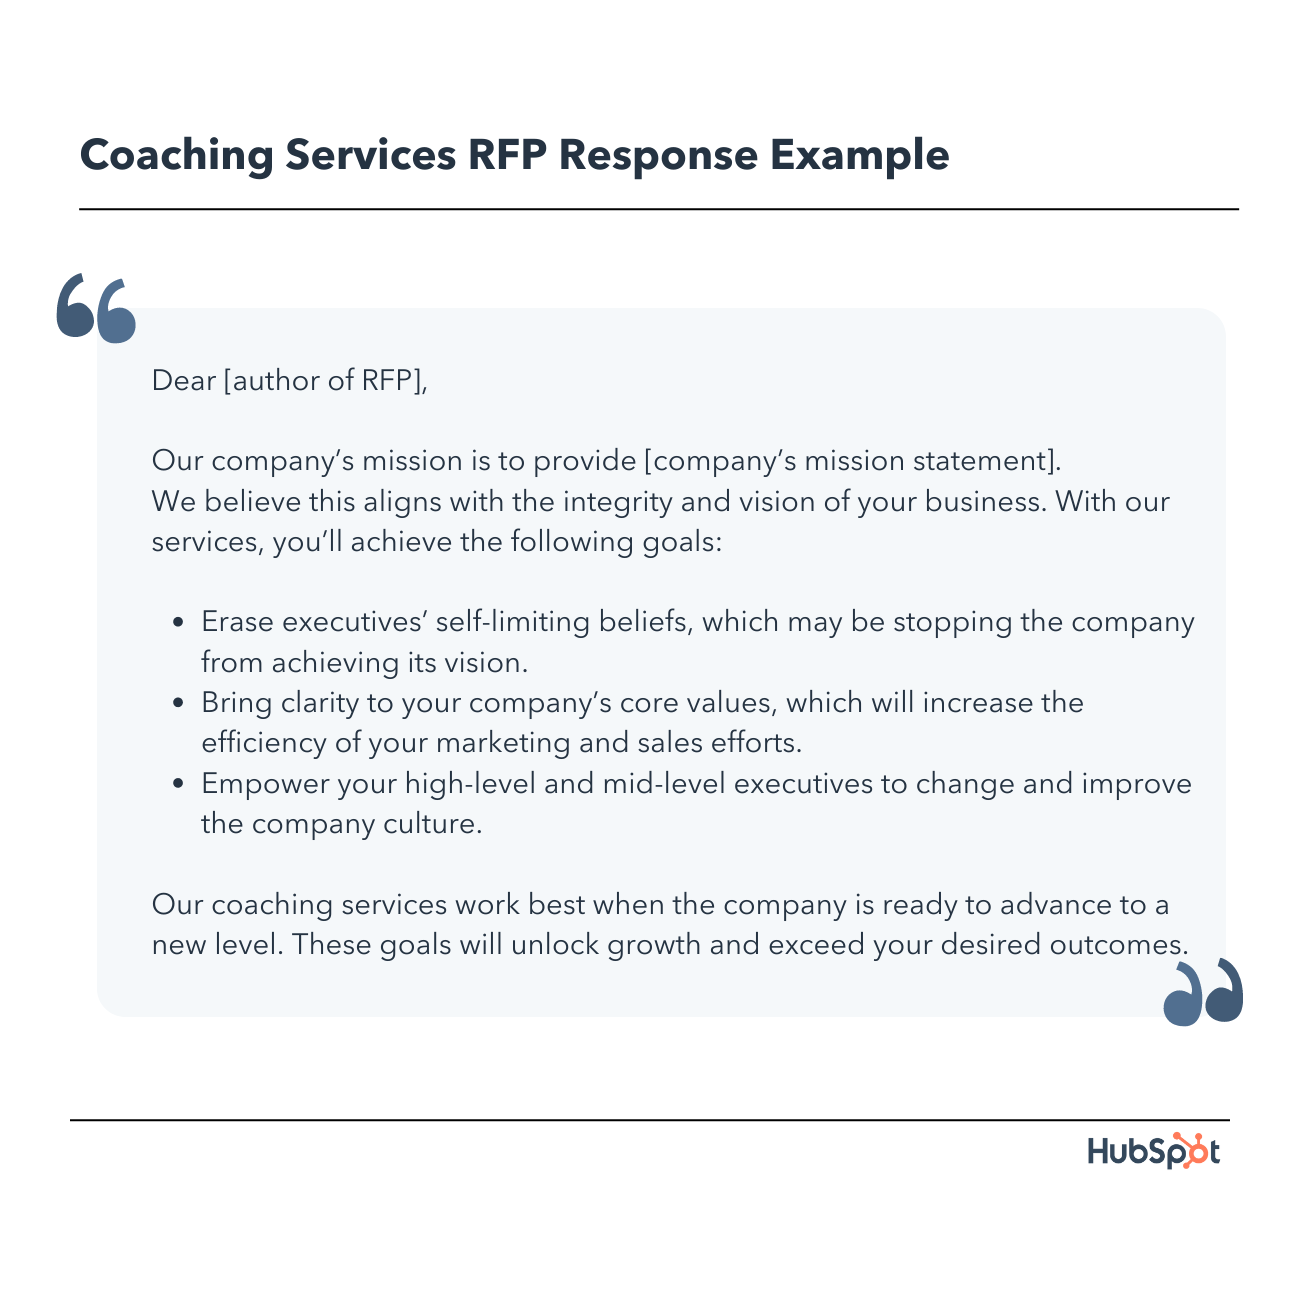 Coaching Services RFP Response